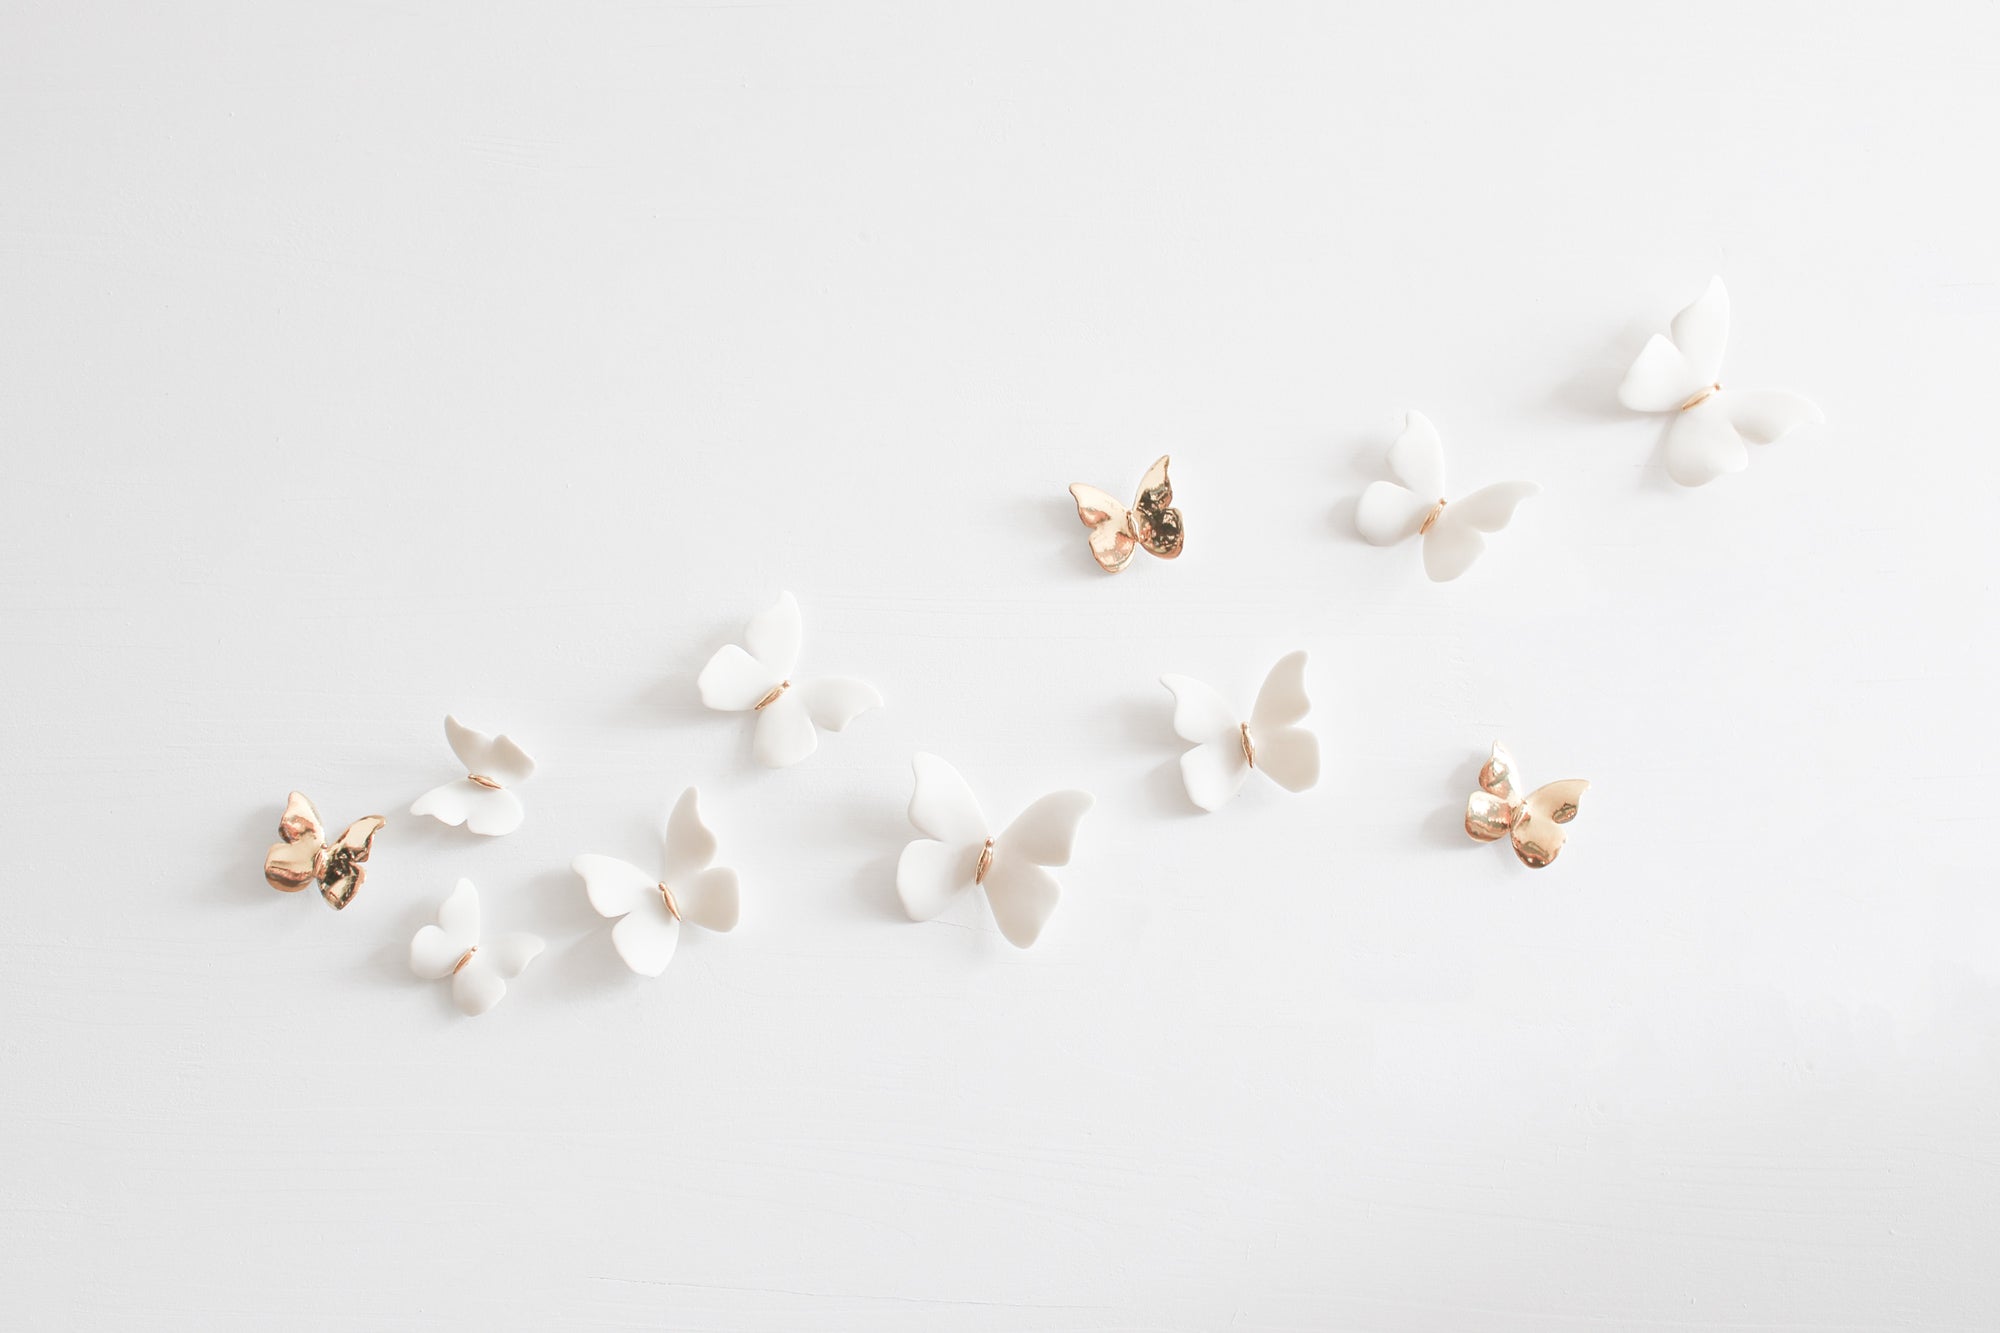 Wall Decor of Porcelain Butterflies by Alain Granell